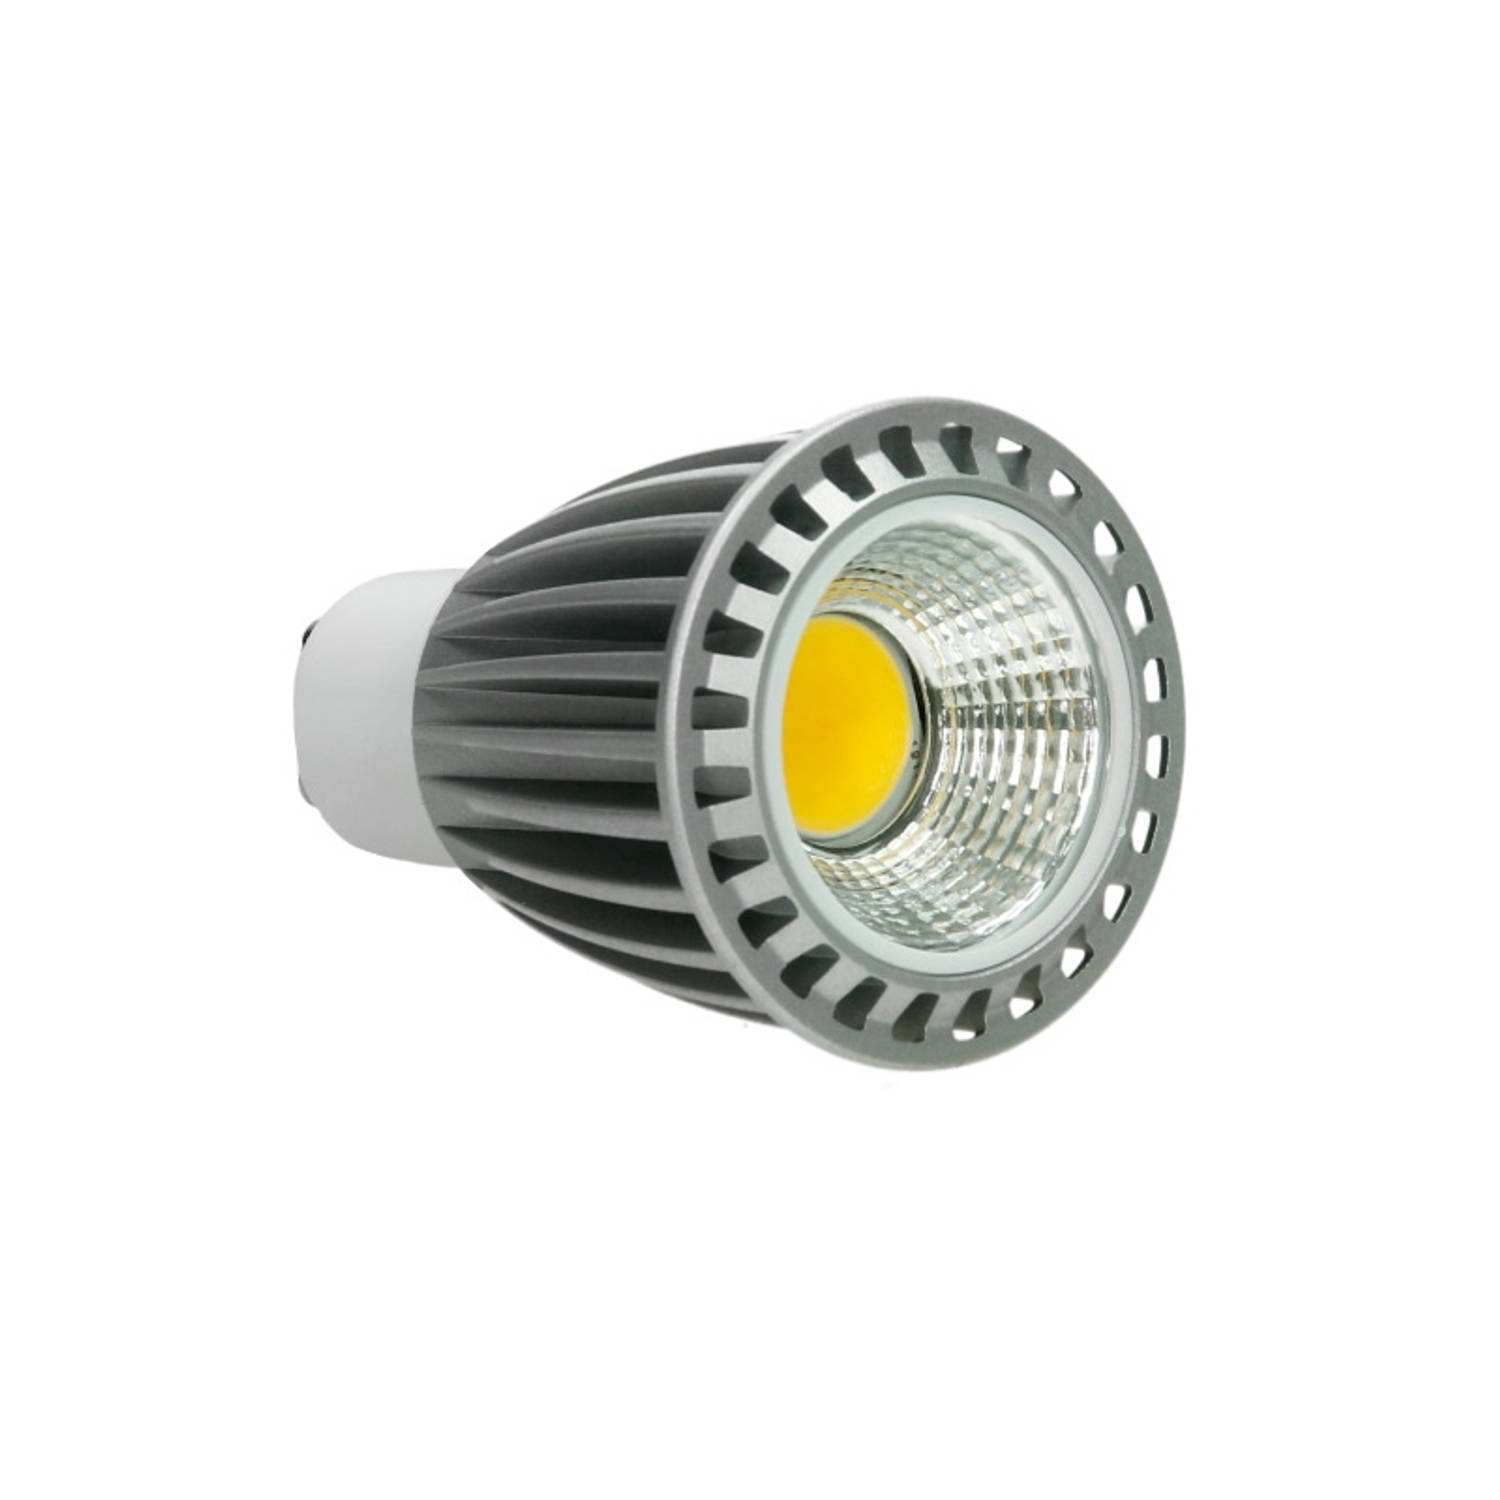 ECD Germany 4-pack 9W GU10 LED-spot vervangt - 60W halogeen - 220-240V 60° stralingshoek - 552 lumen - 6000K koel wit